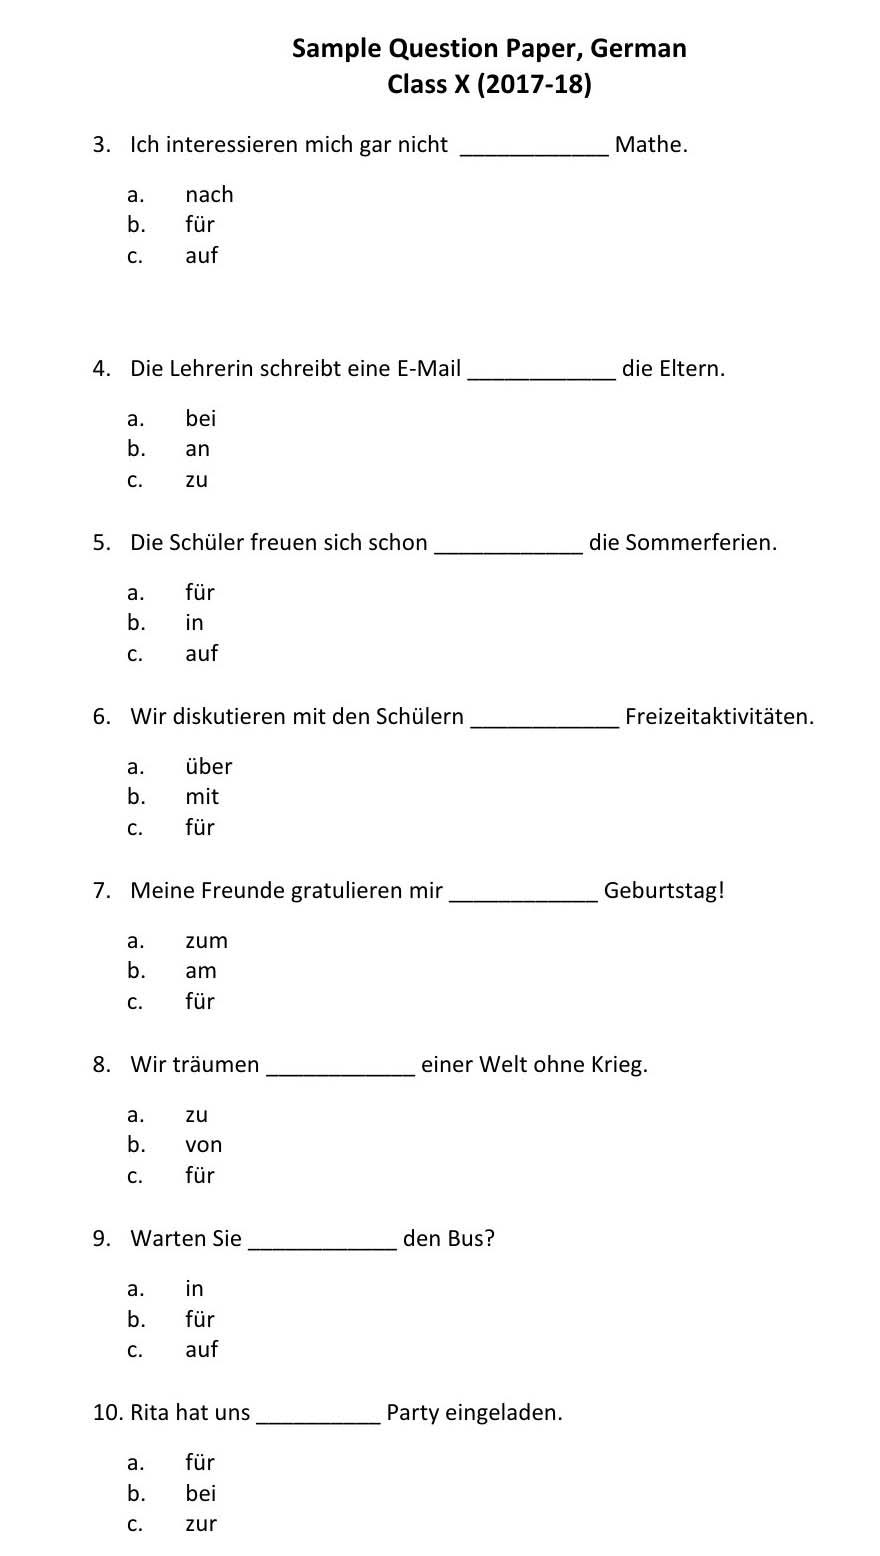 German CBSE Class X Sample Question Paper 2017 18 - Image 6